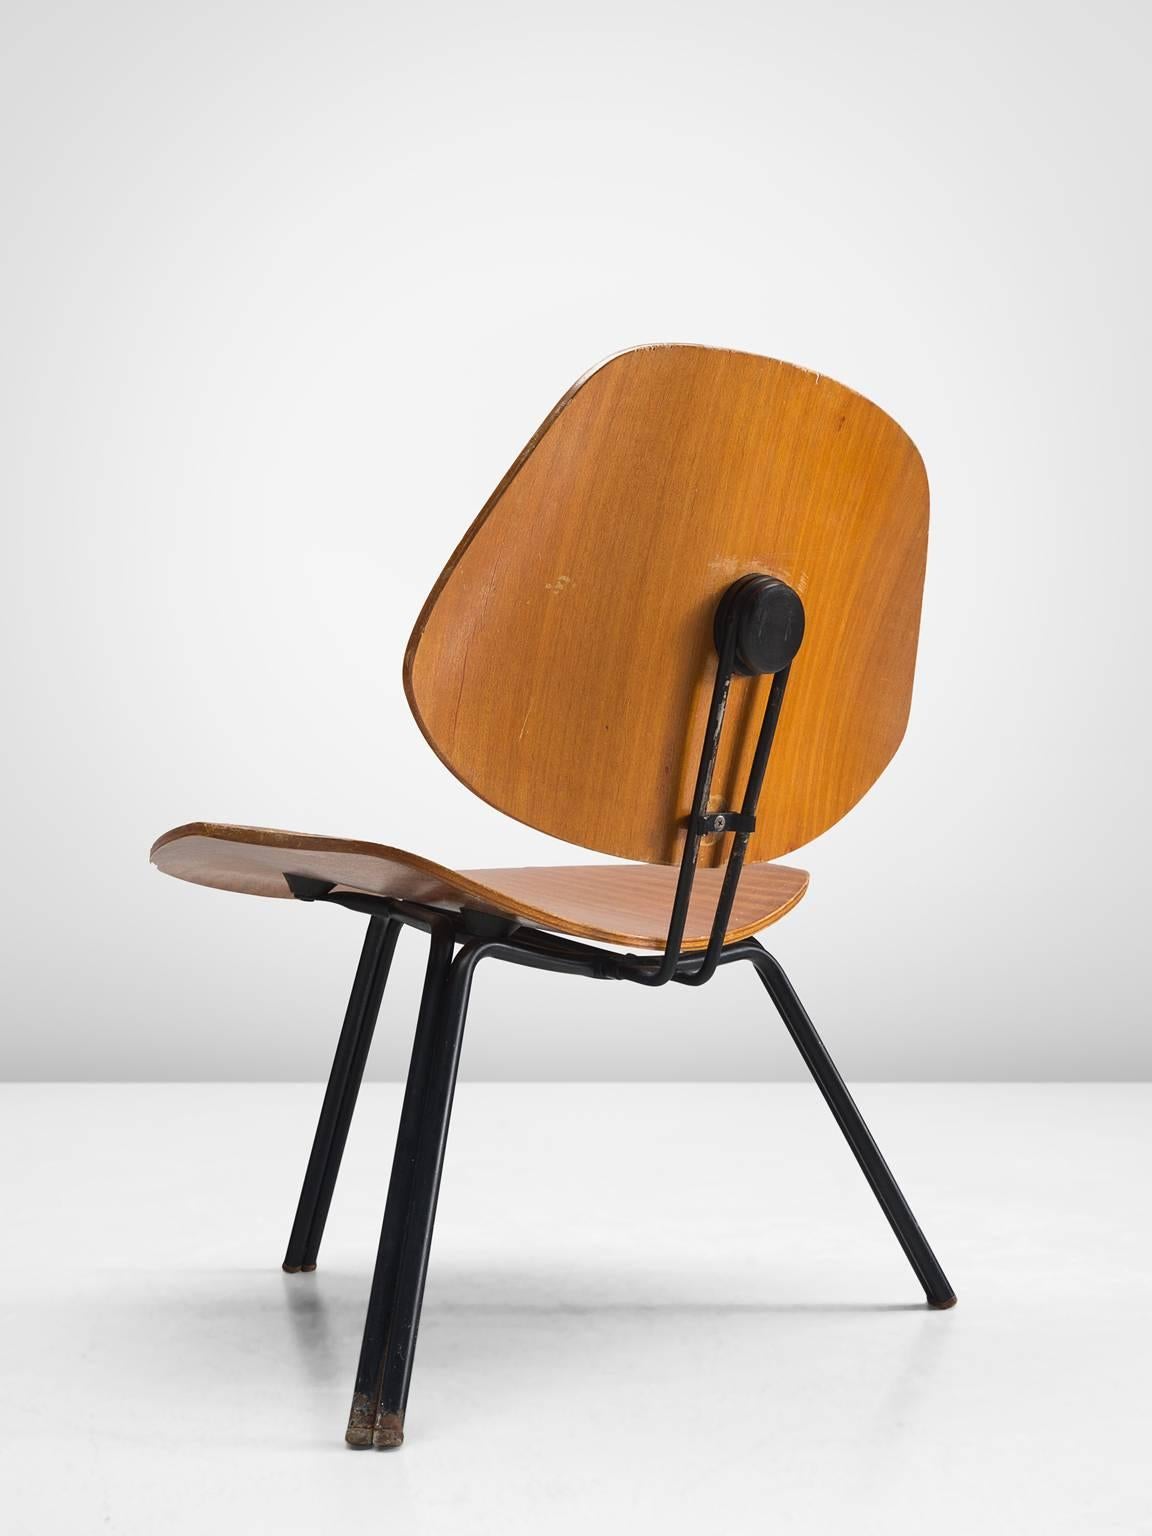 Italian Osvaldo Borsani for Tecno 'P31' Chair, 1957